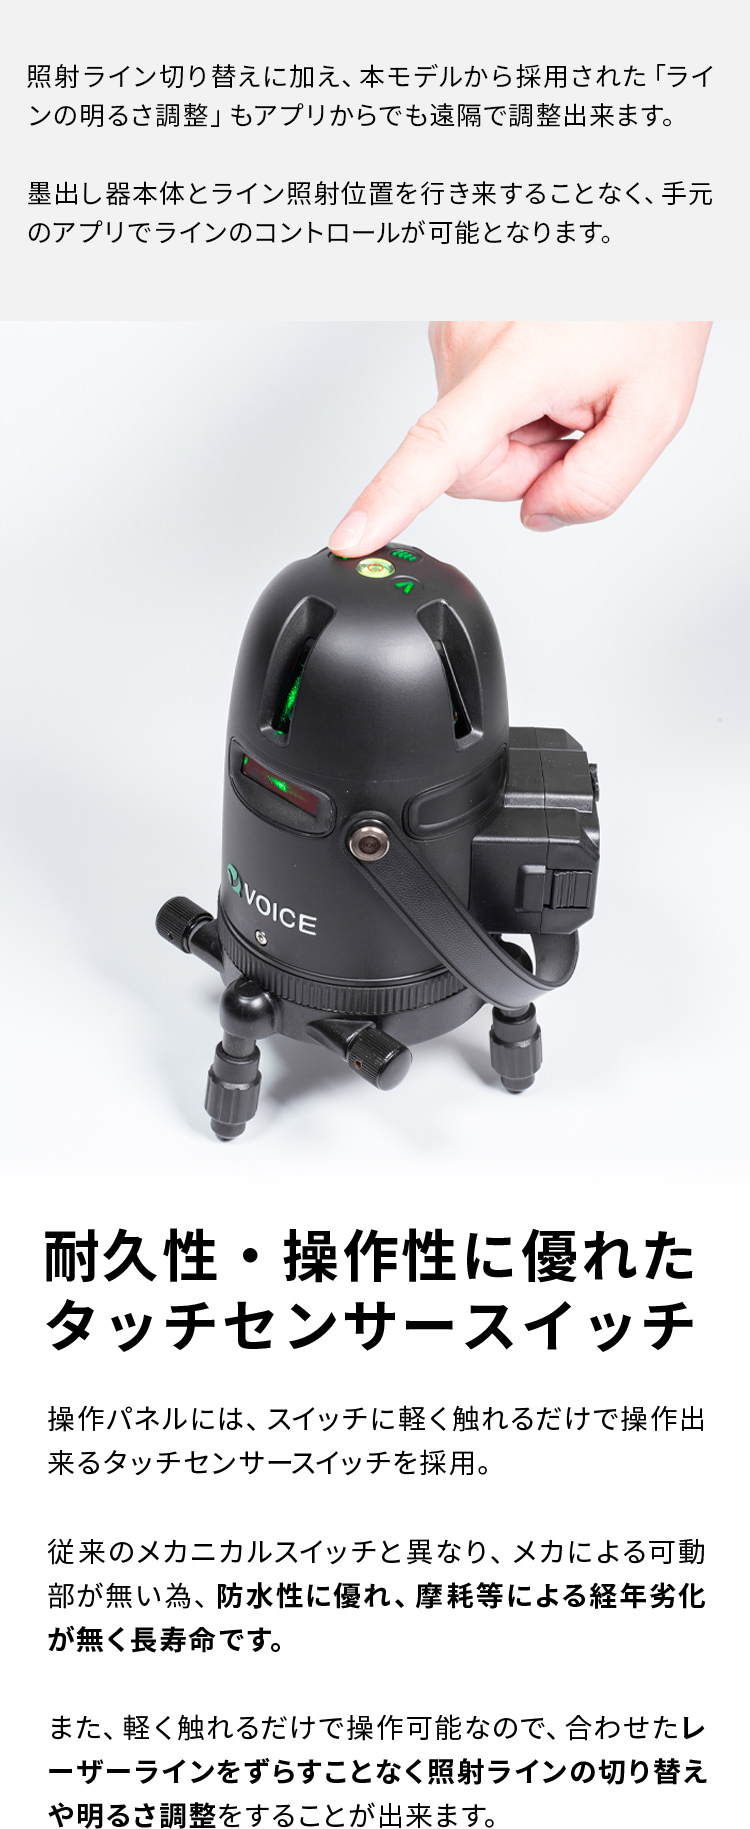 VOICE 5ライン グリーンレーザー墨出し器 Model-G5 – VOICE公式ストア